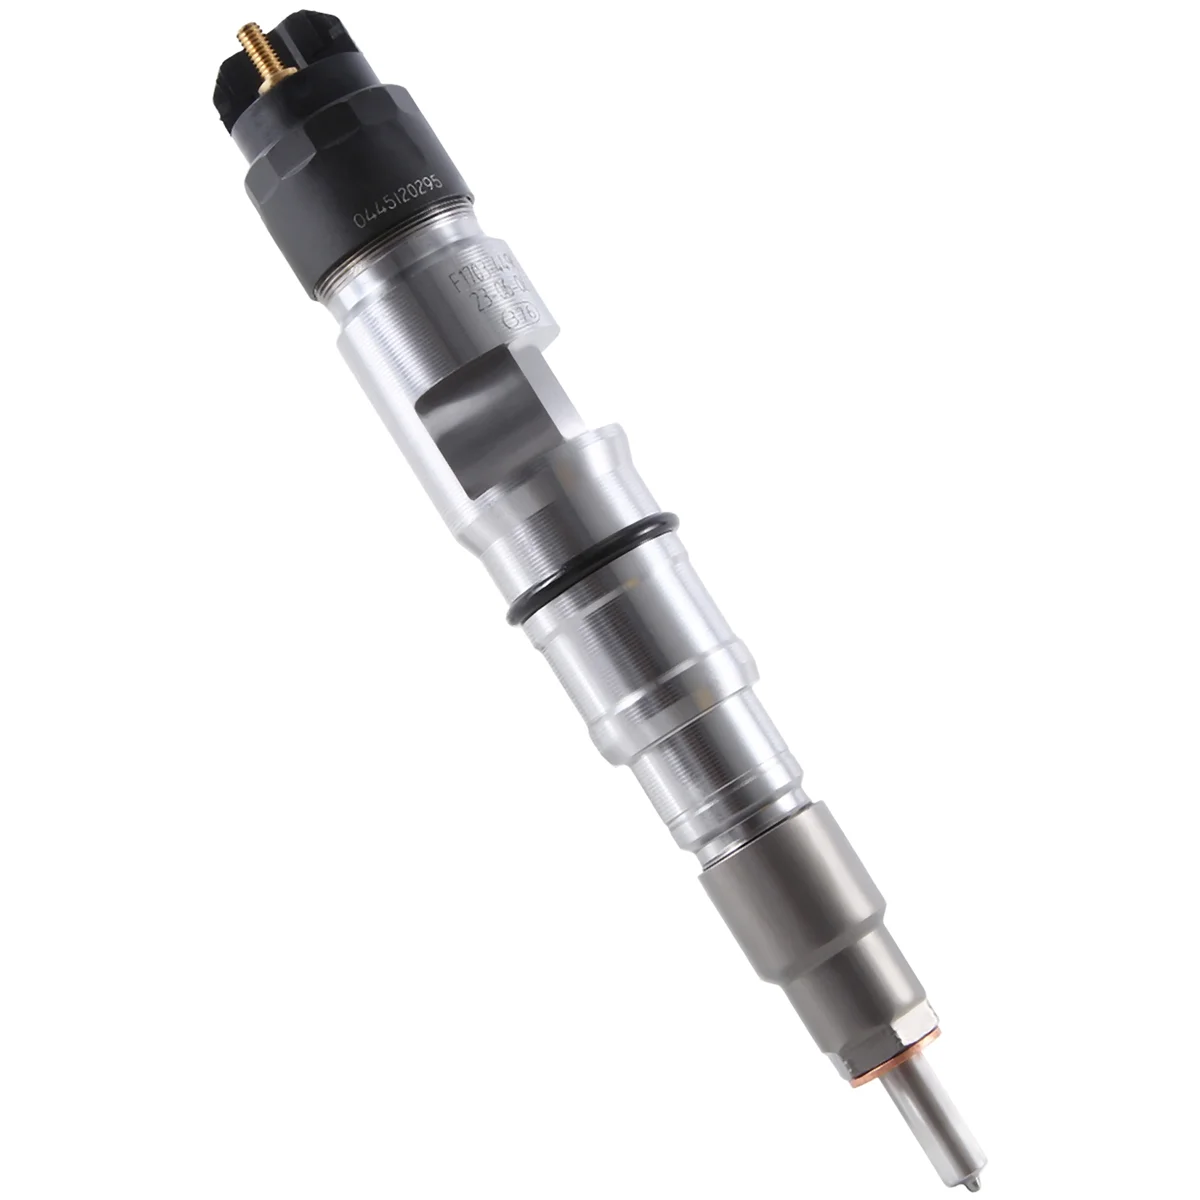 

0445120295 New Diesel Fuel Injector Nozzle for Doosan DX160W-3 DL06KB DL220 Excavator